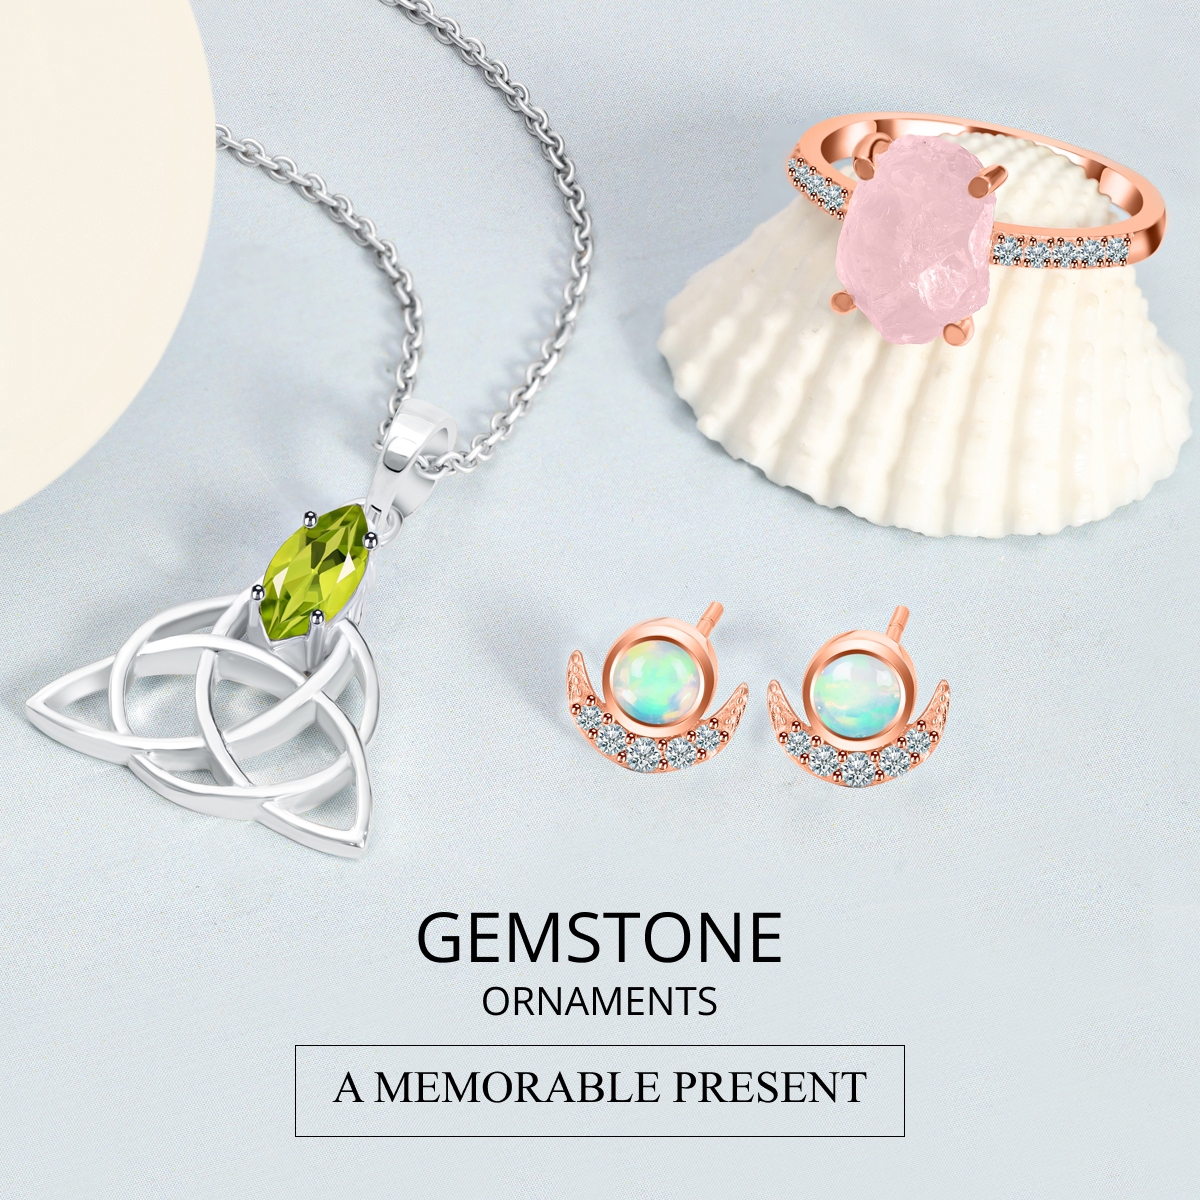 Gemstone Ornaments - A Memorable Present